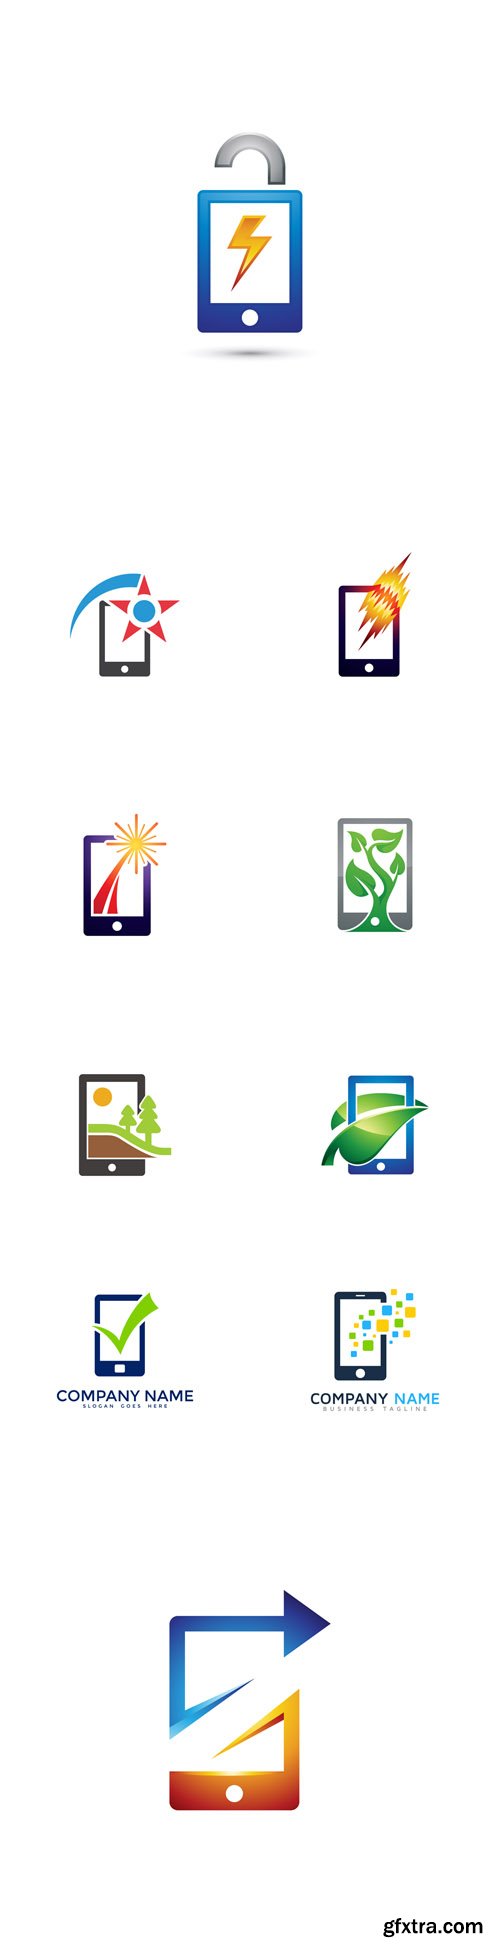 Vector Set - Mobile Apps Logo Design Templates